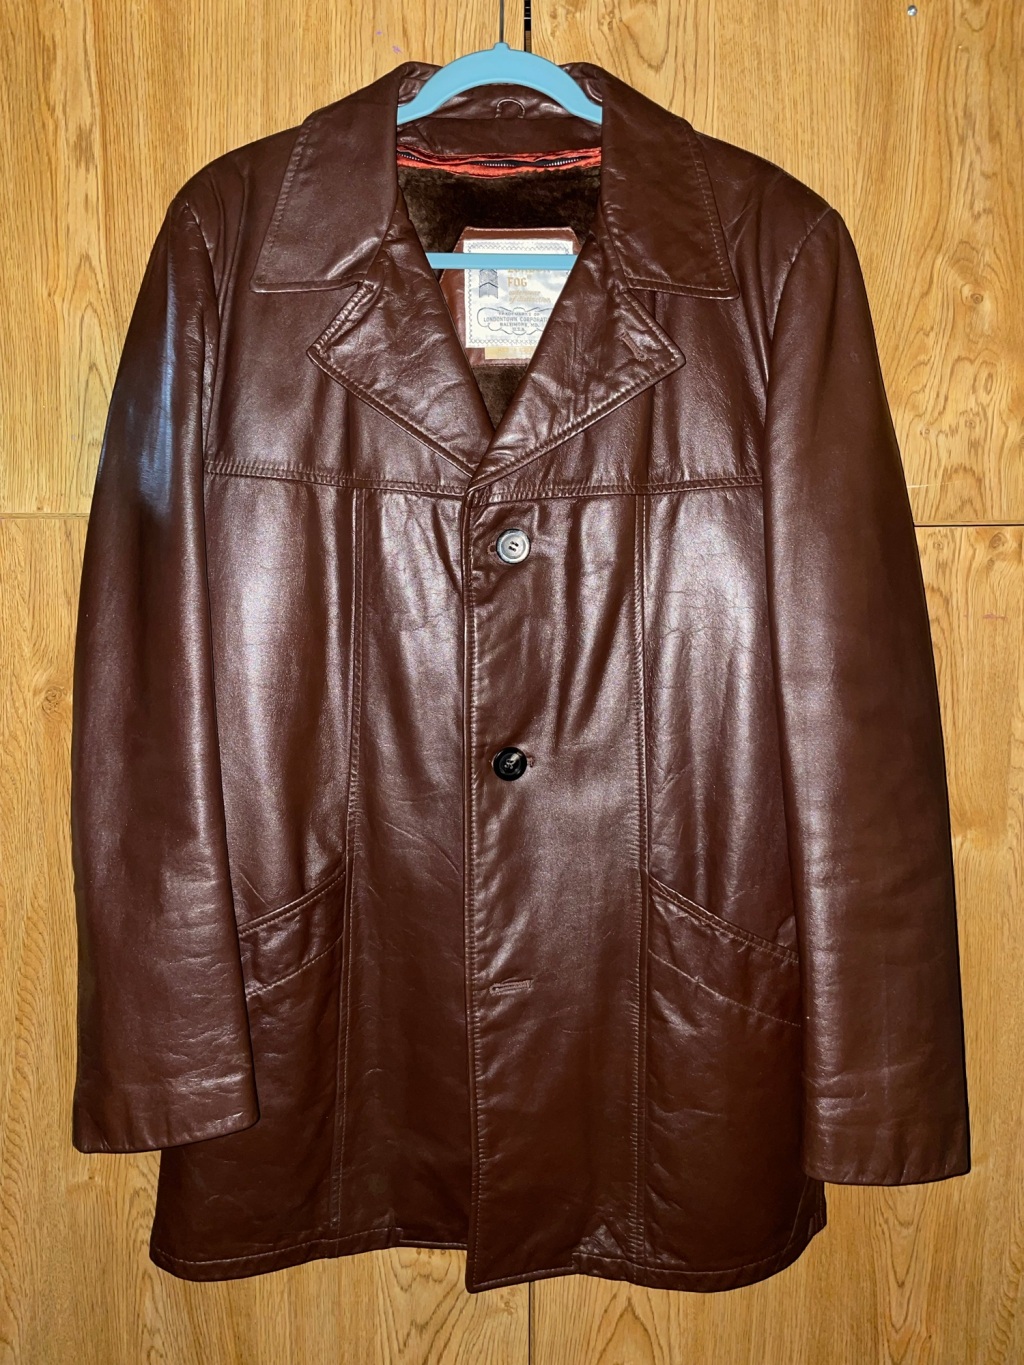 Styling an Oversized Leather Jacket